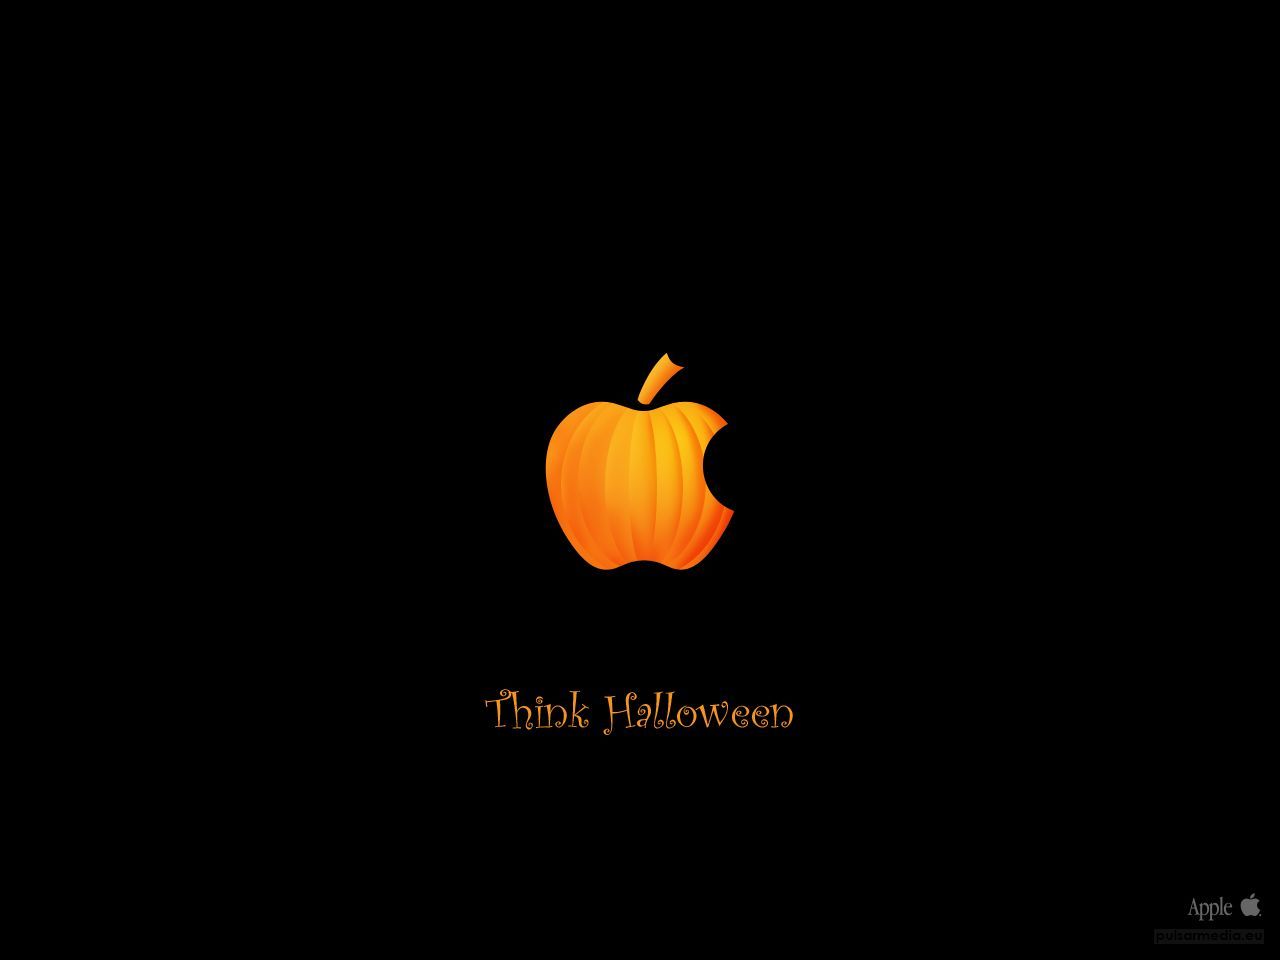 Apple Mac Wallpaper, Design Wallpaper, Desktops. Free halloween wallpaper, Halloween image, Halloween apples